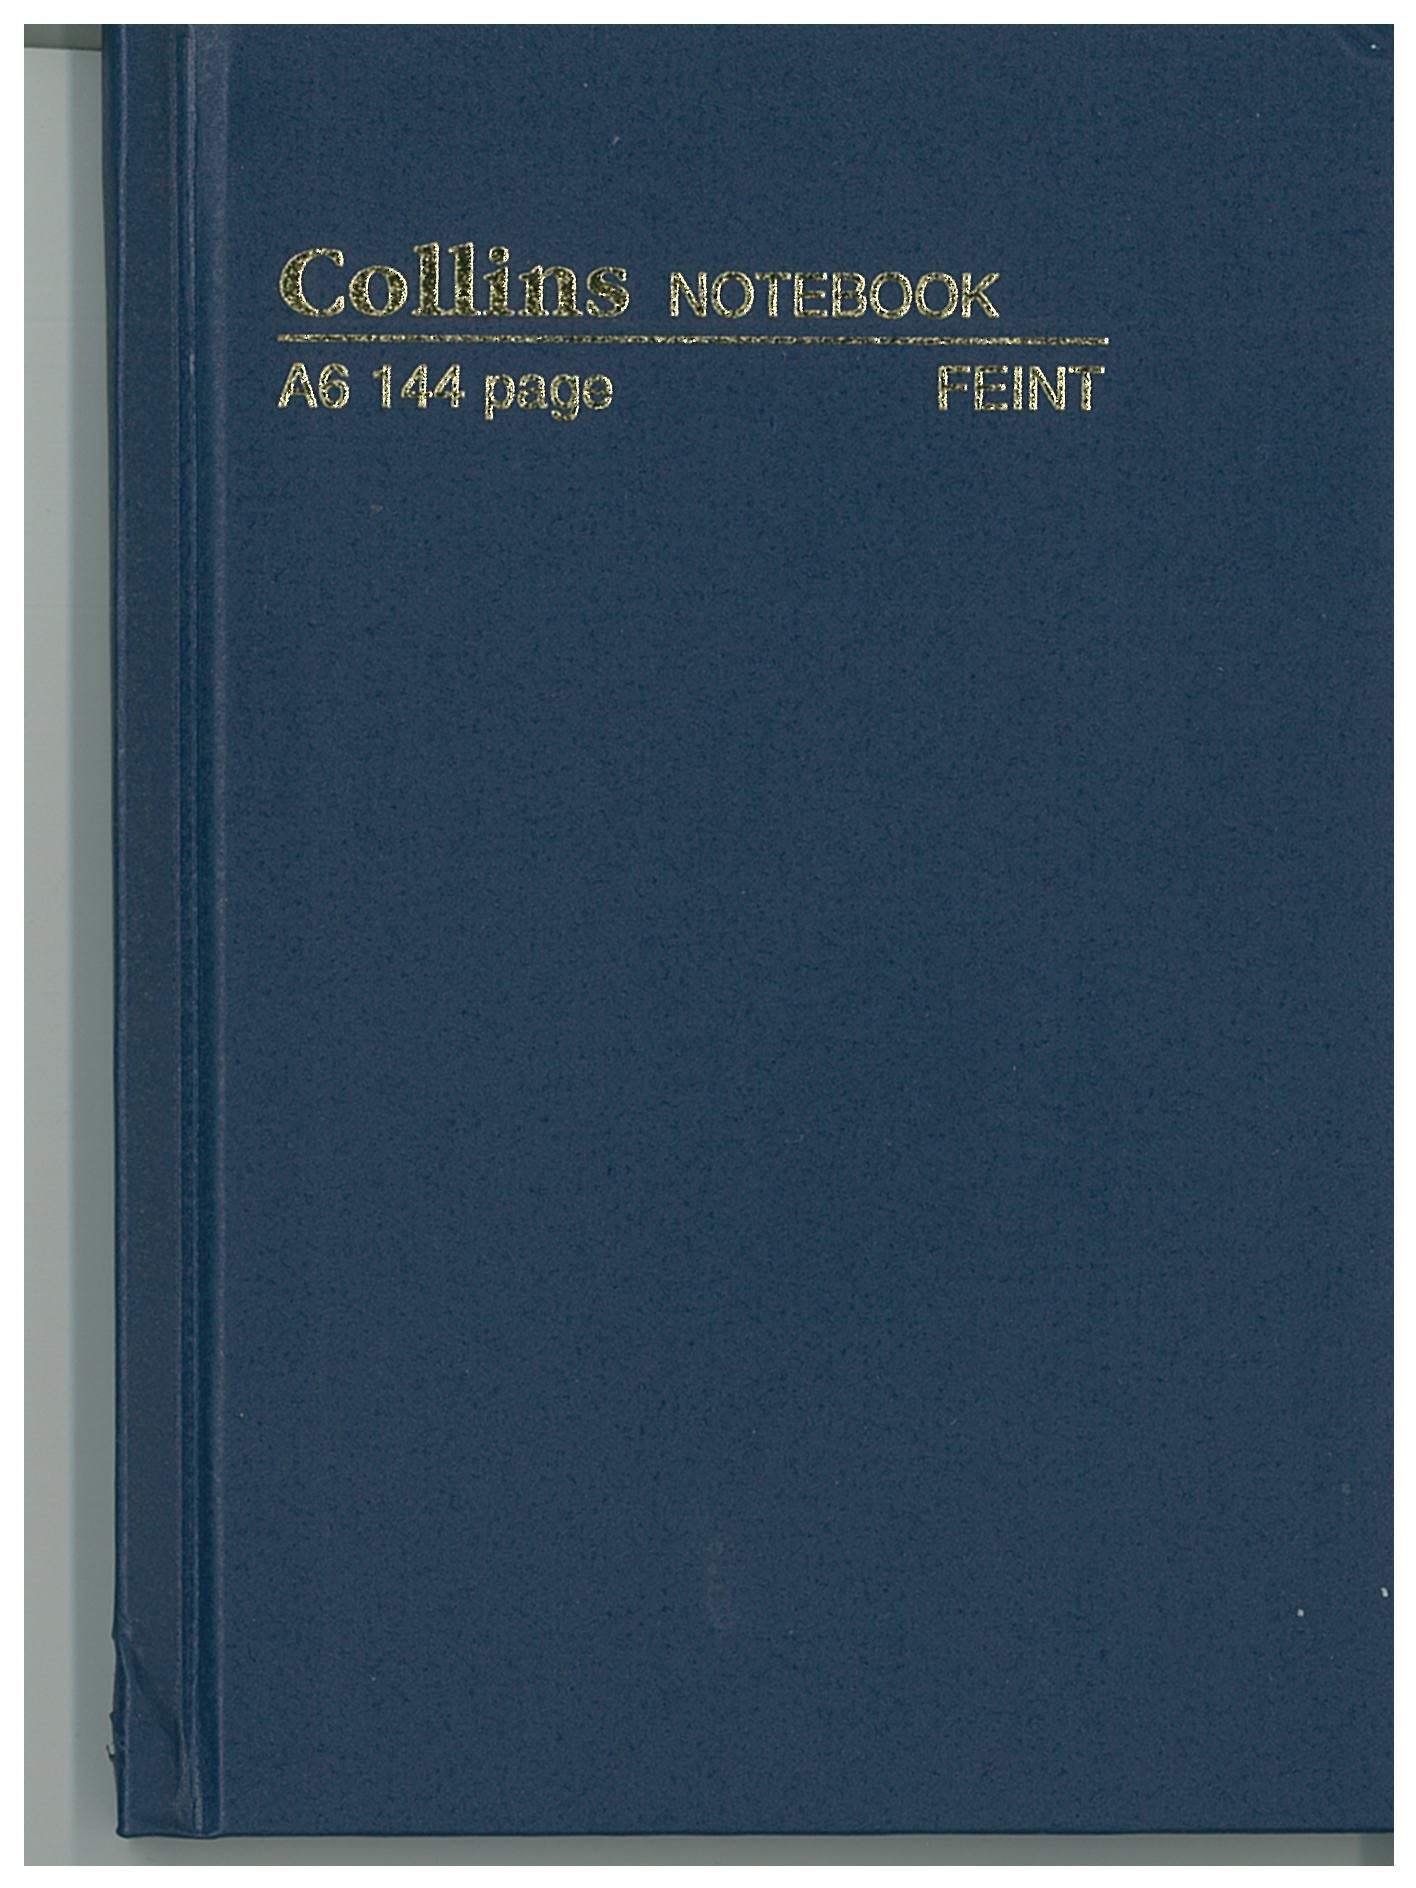 Case & Sewn Notebook - 5400 Default Title